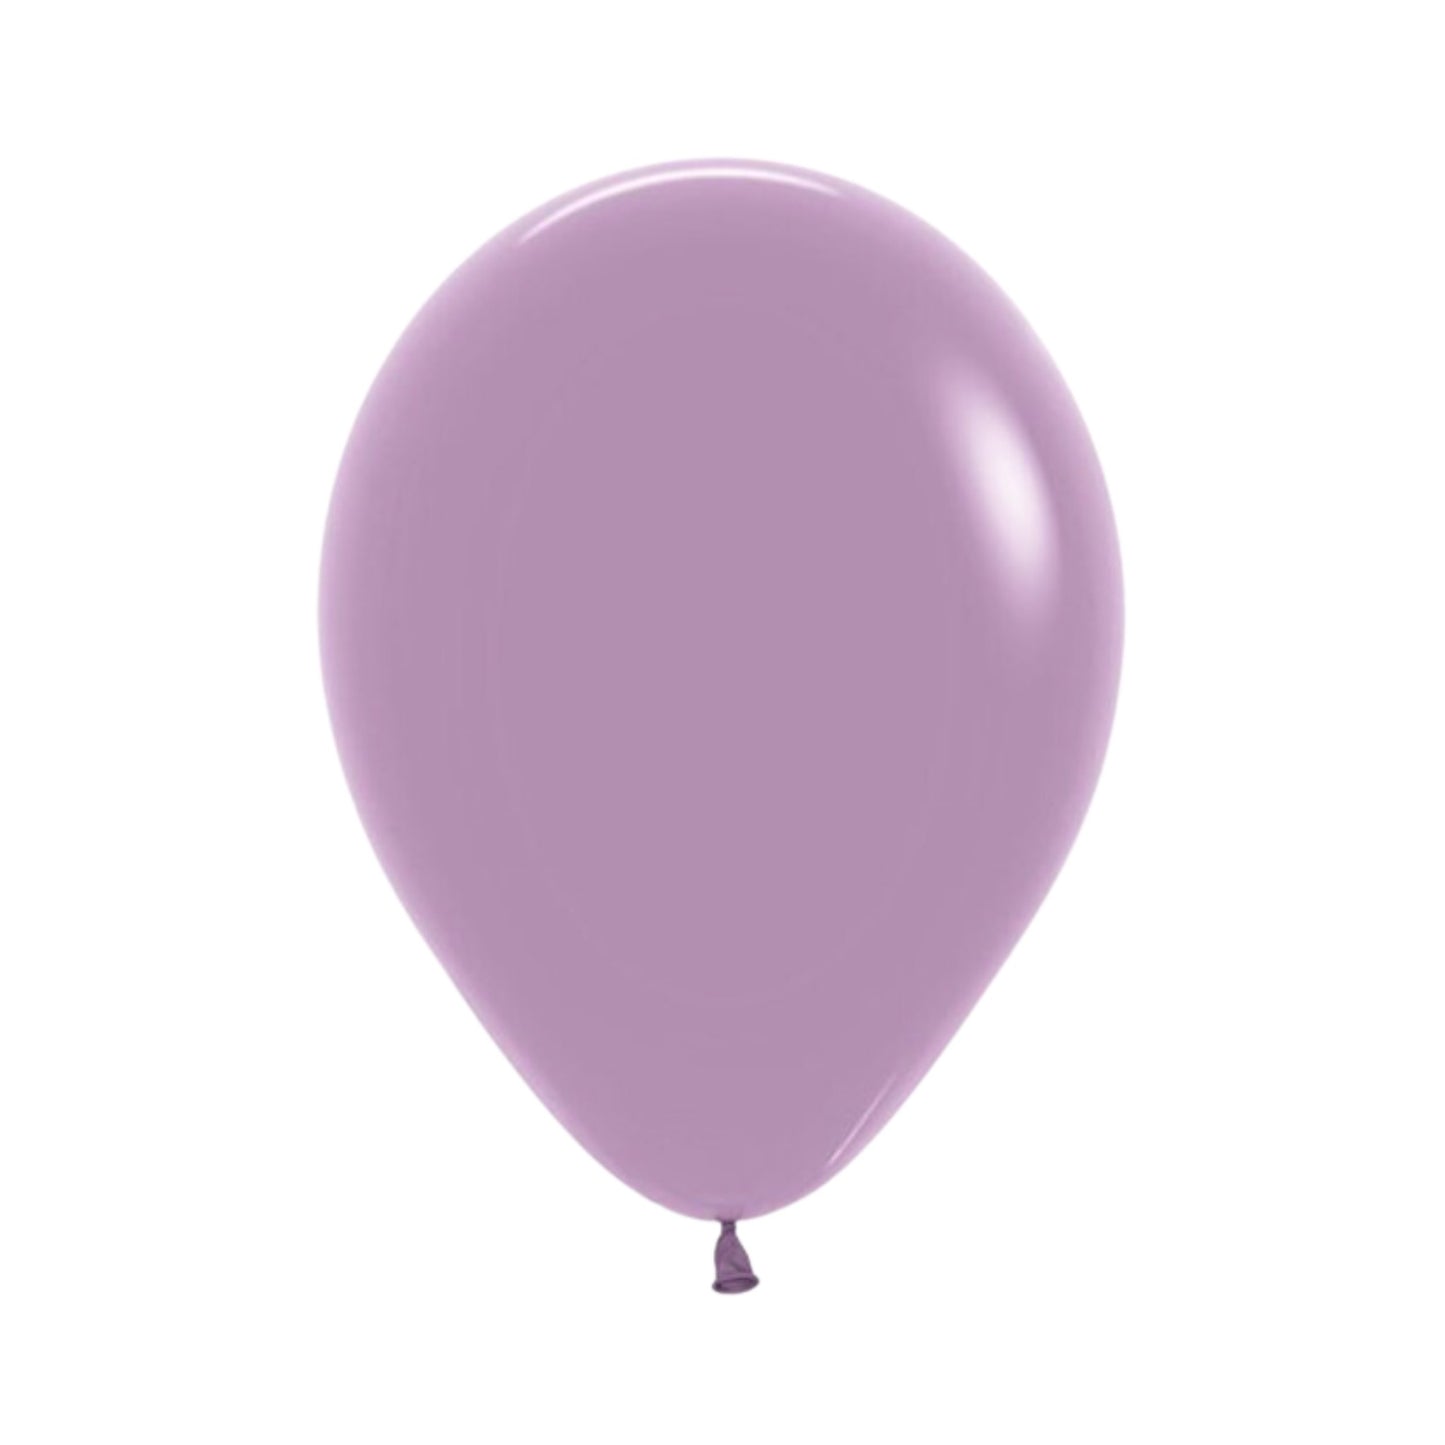 30cm standard size lilac balloon